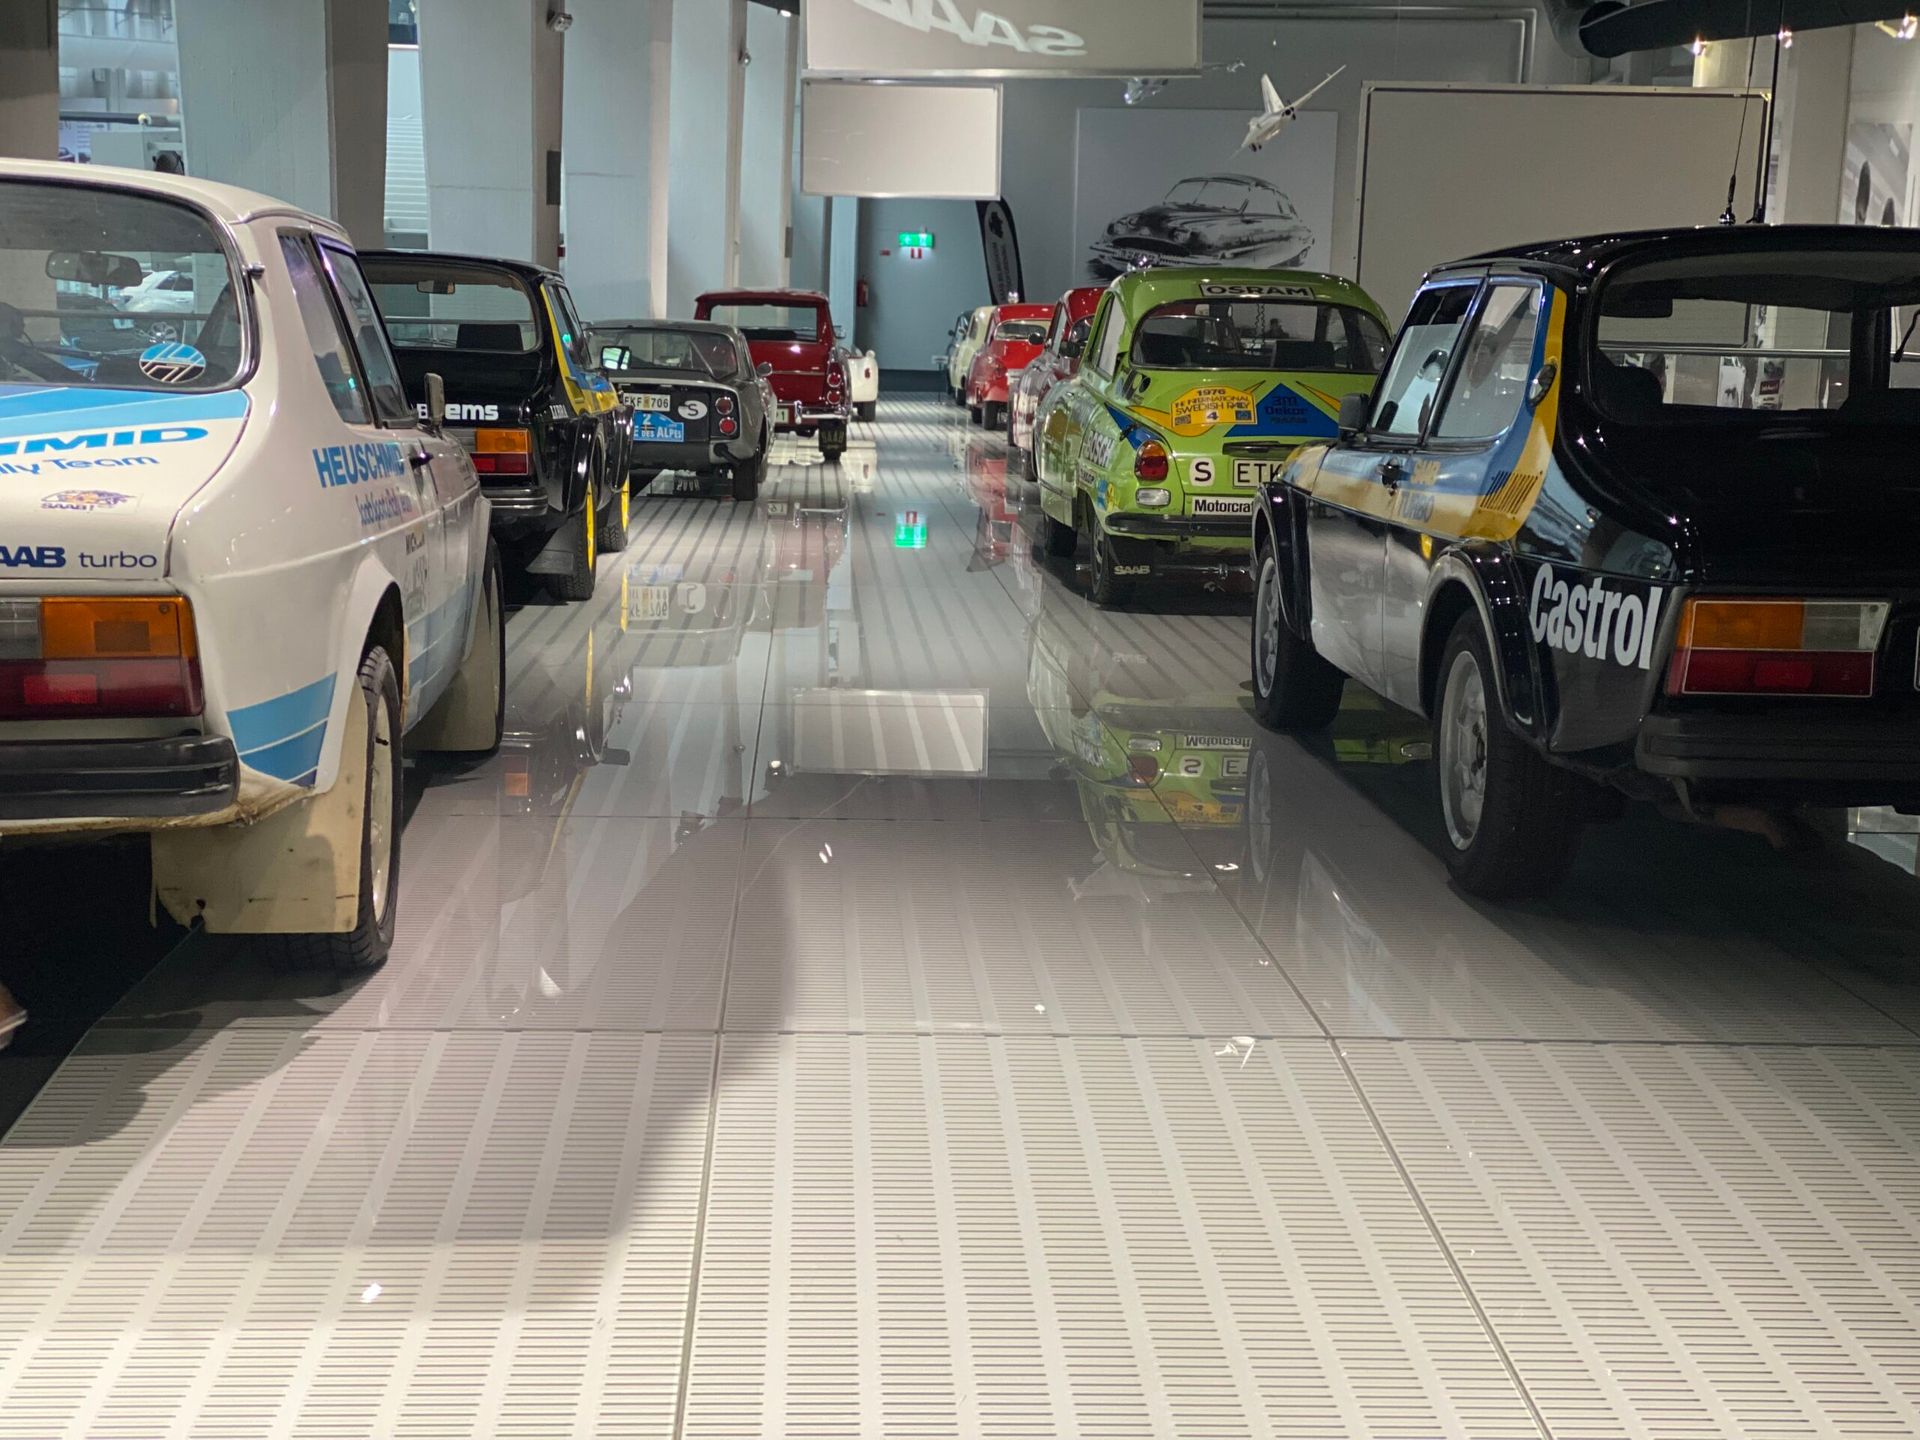 Cars on display at SAAB car museum